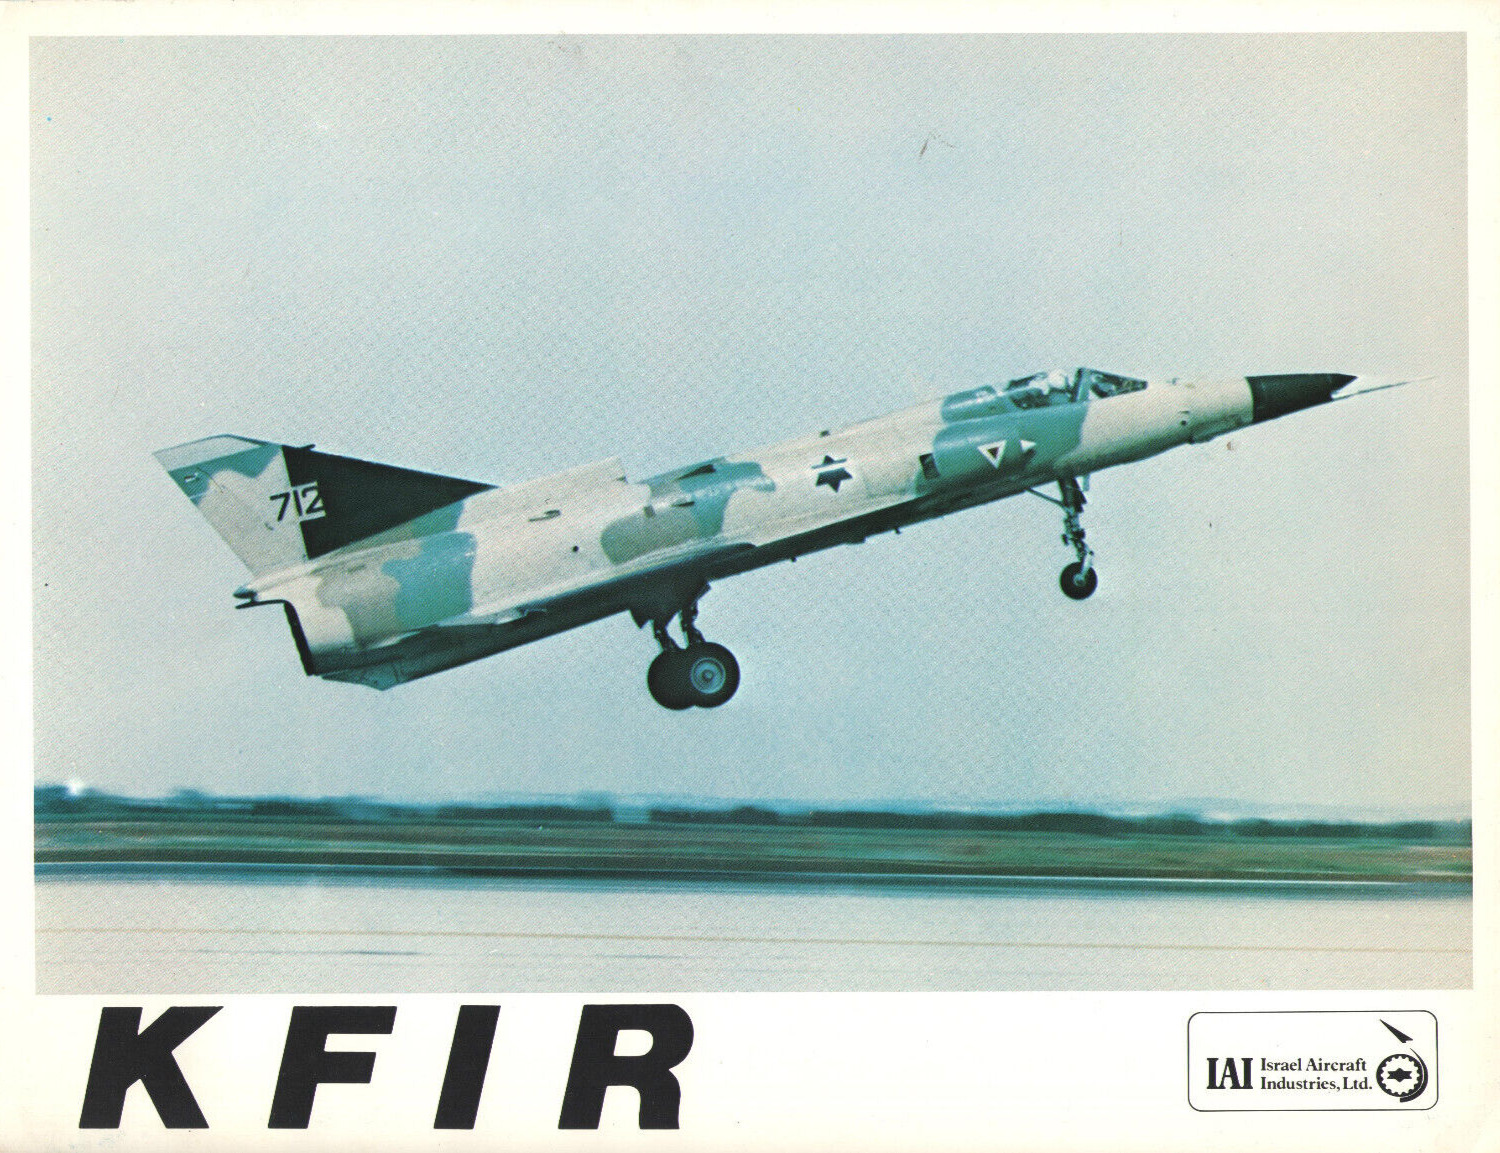 VINTAGE 1970s KFIR ISRAELI ALL-WEATHER MULTIROLE COMBAT JET AIRCRAFT COLOR PHOTO